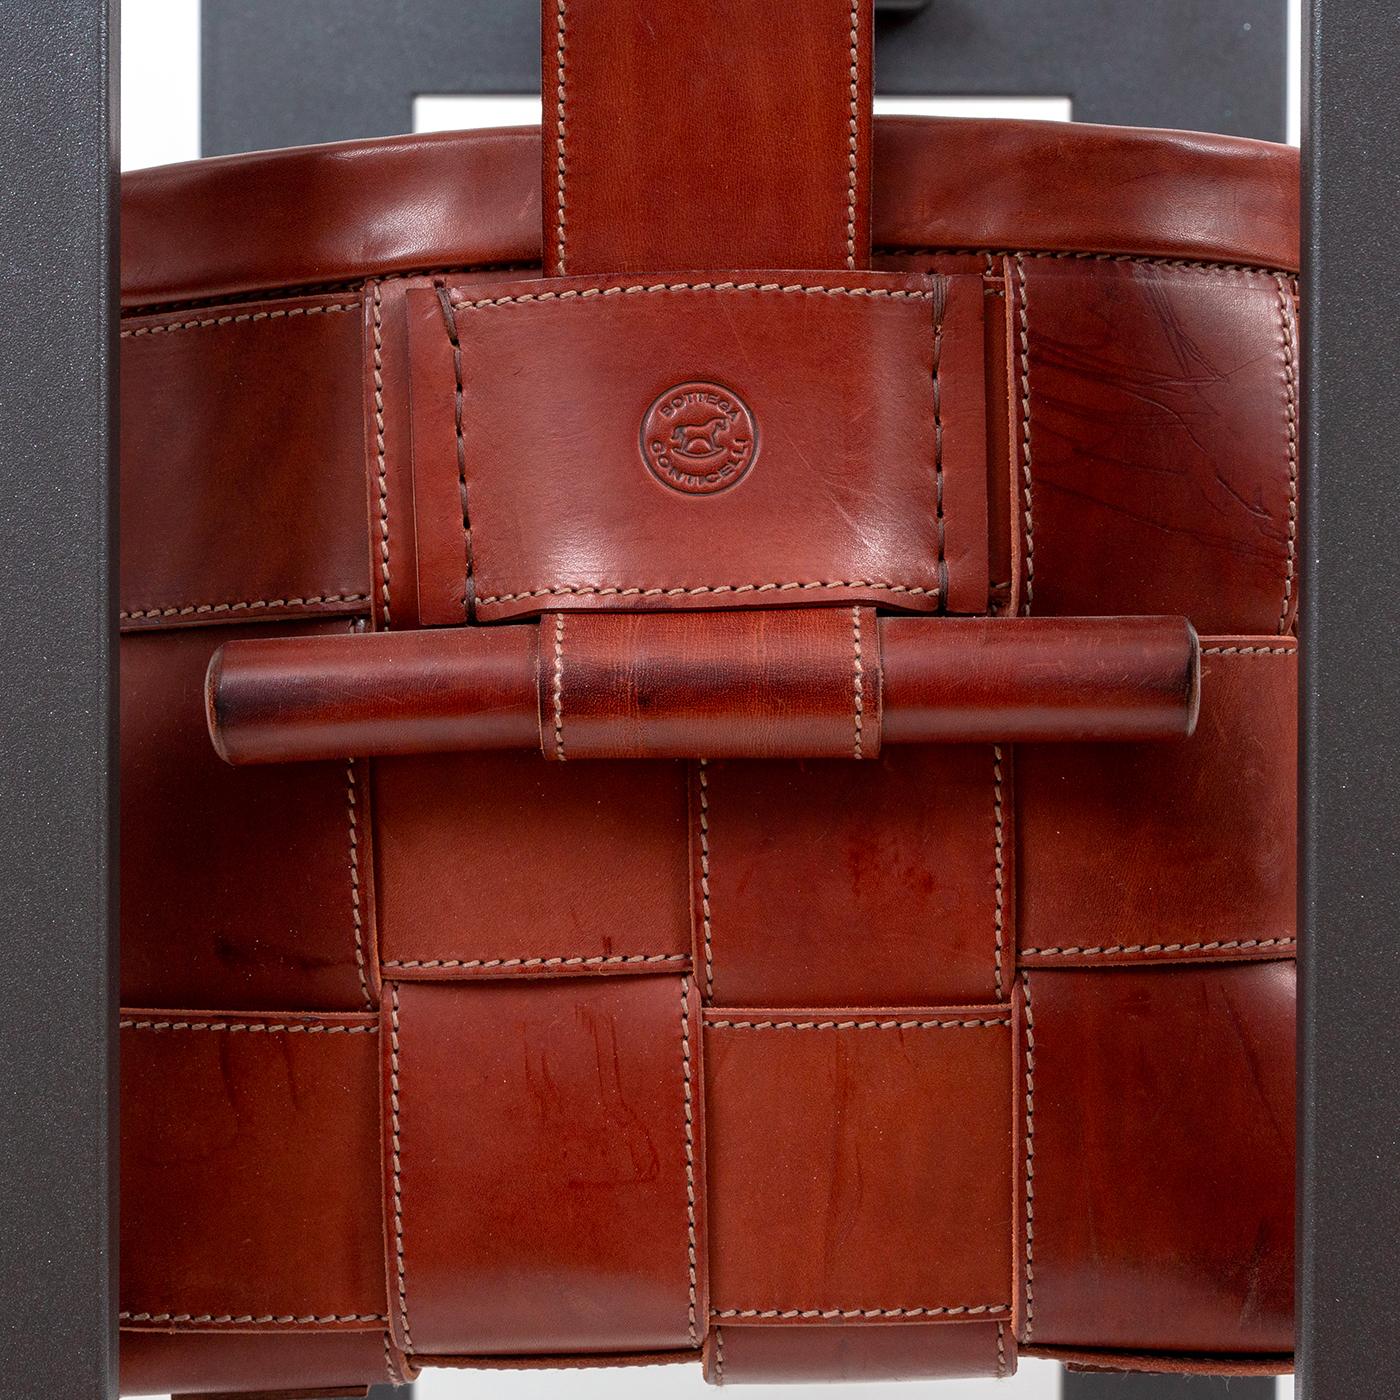 Modern Leather Basket with Stand Dark Brown